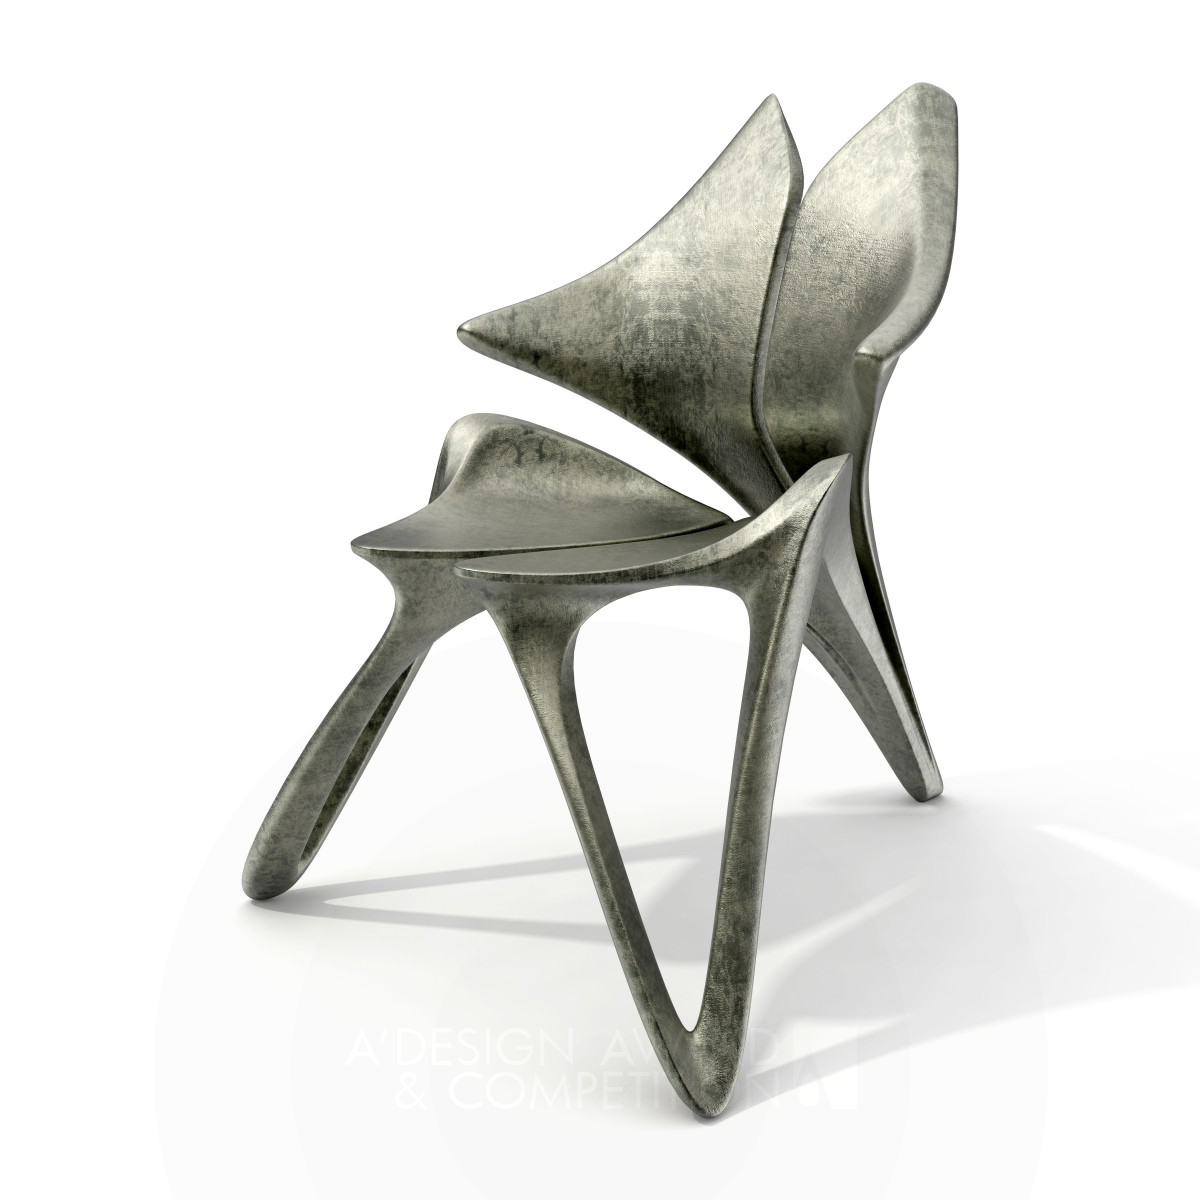 Blooming Leisure Chair by Wei Jingye